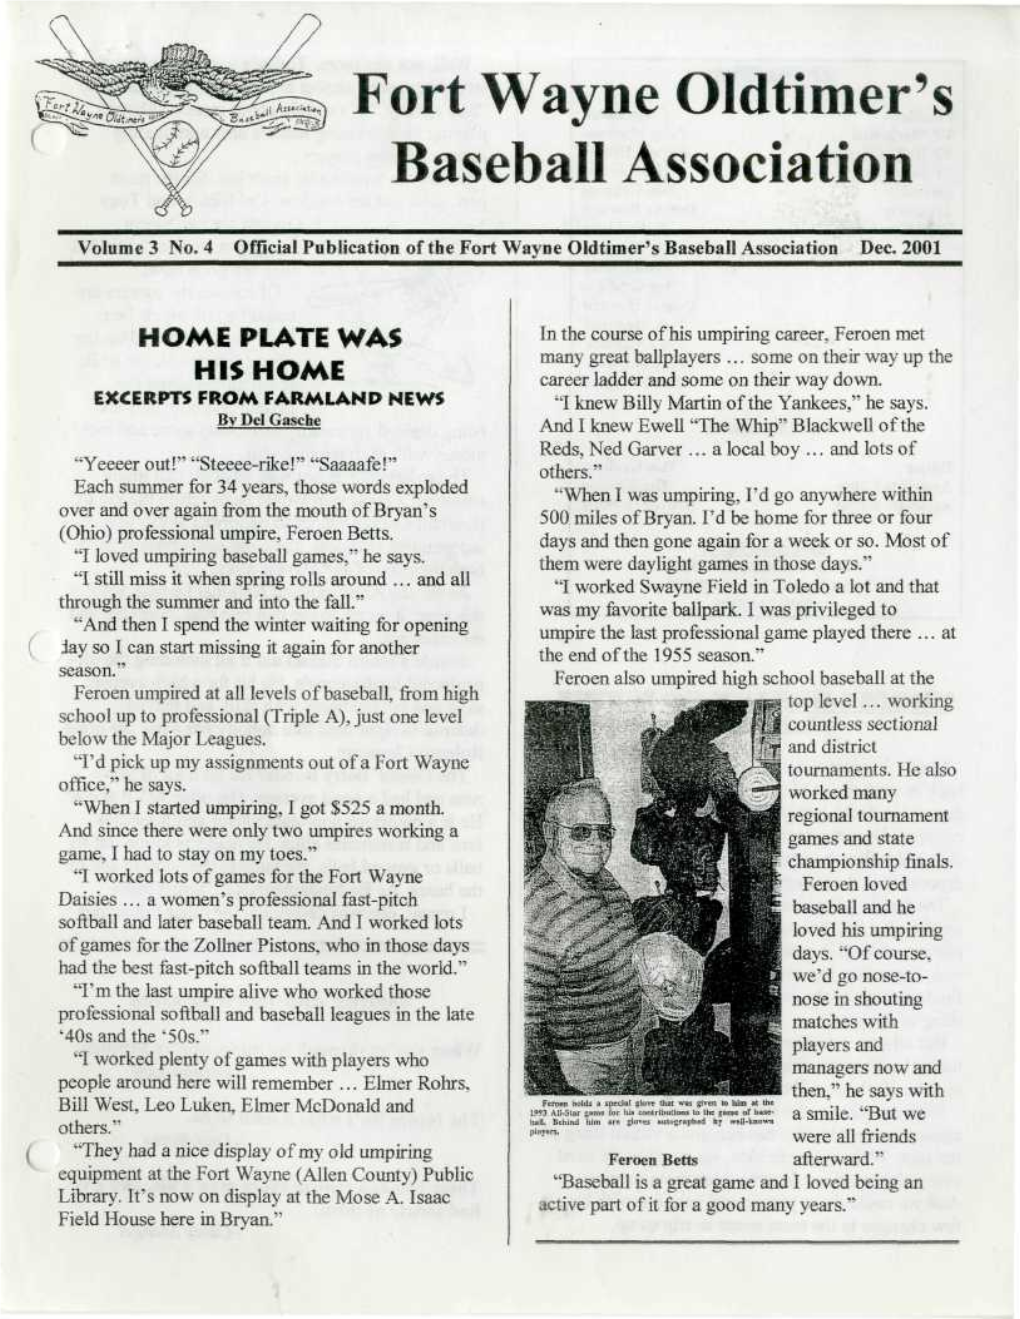 Fort Wayne Oldtimer's Baseball Association